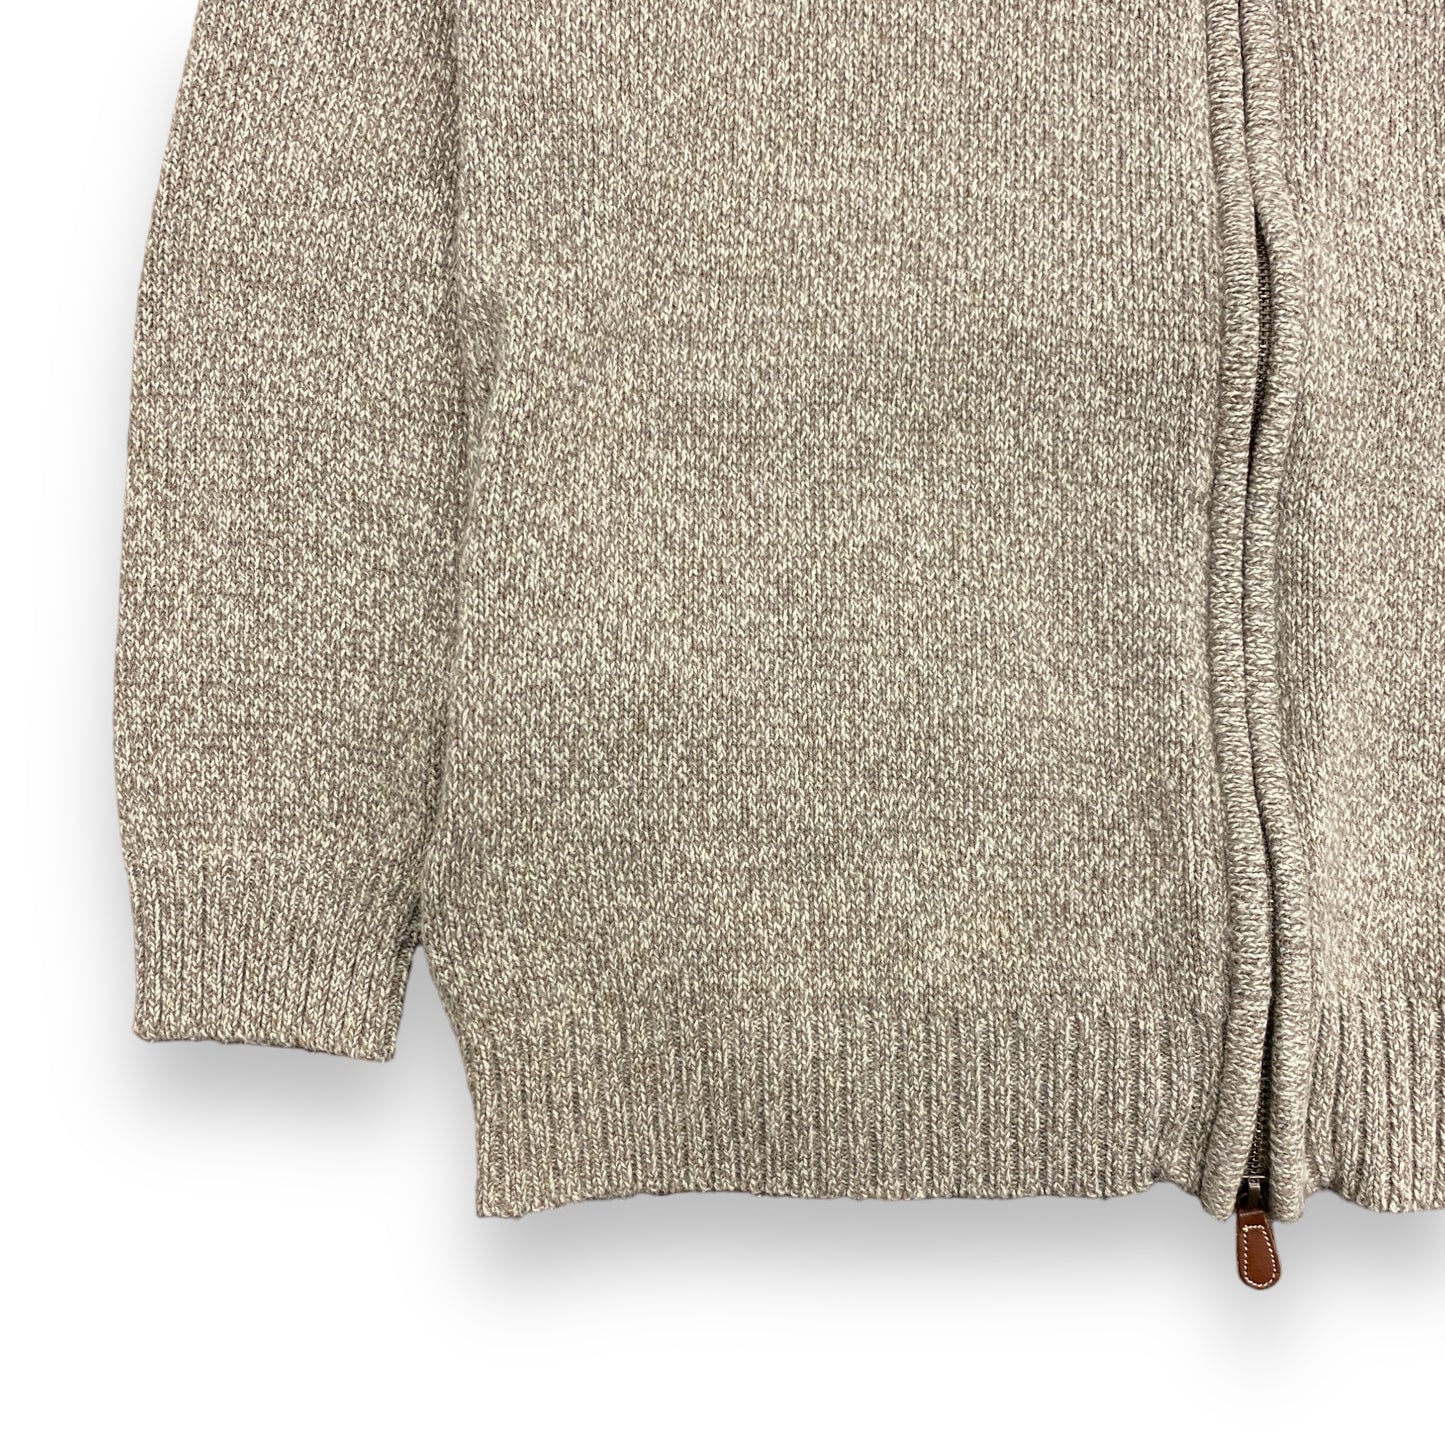 Oscar De La Renta Tan Knit Zip-Up Sweater - Size Small